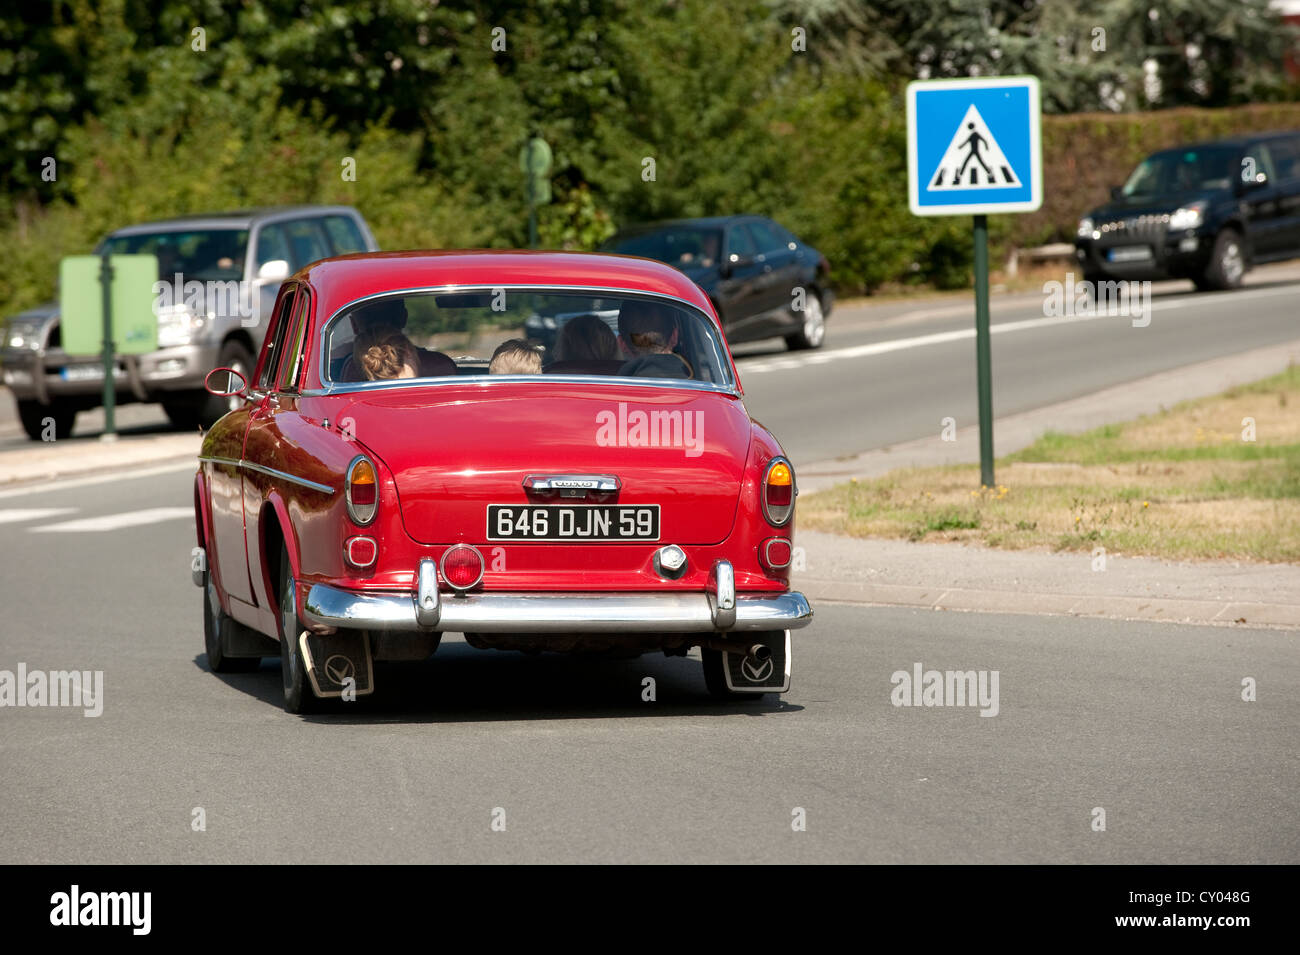 Alte klassische Volvo Auto Le Choquel Frankreich Europa Stockfotografie -  Alamy